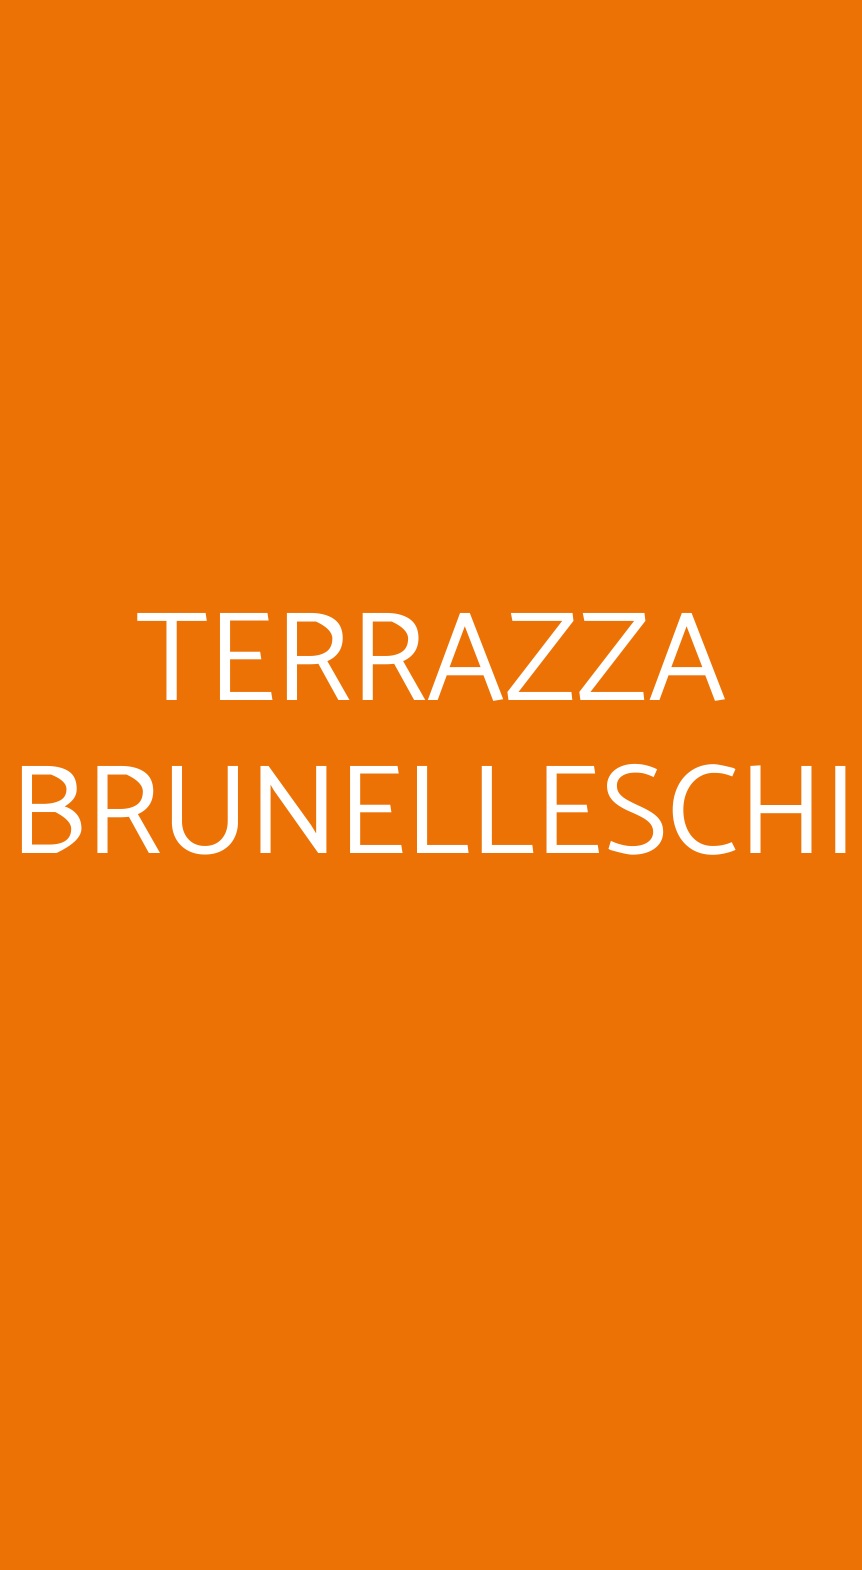 TERRAZZA BRUNELLESCHI Firenze menù 1 pagina